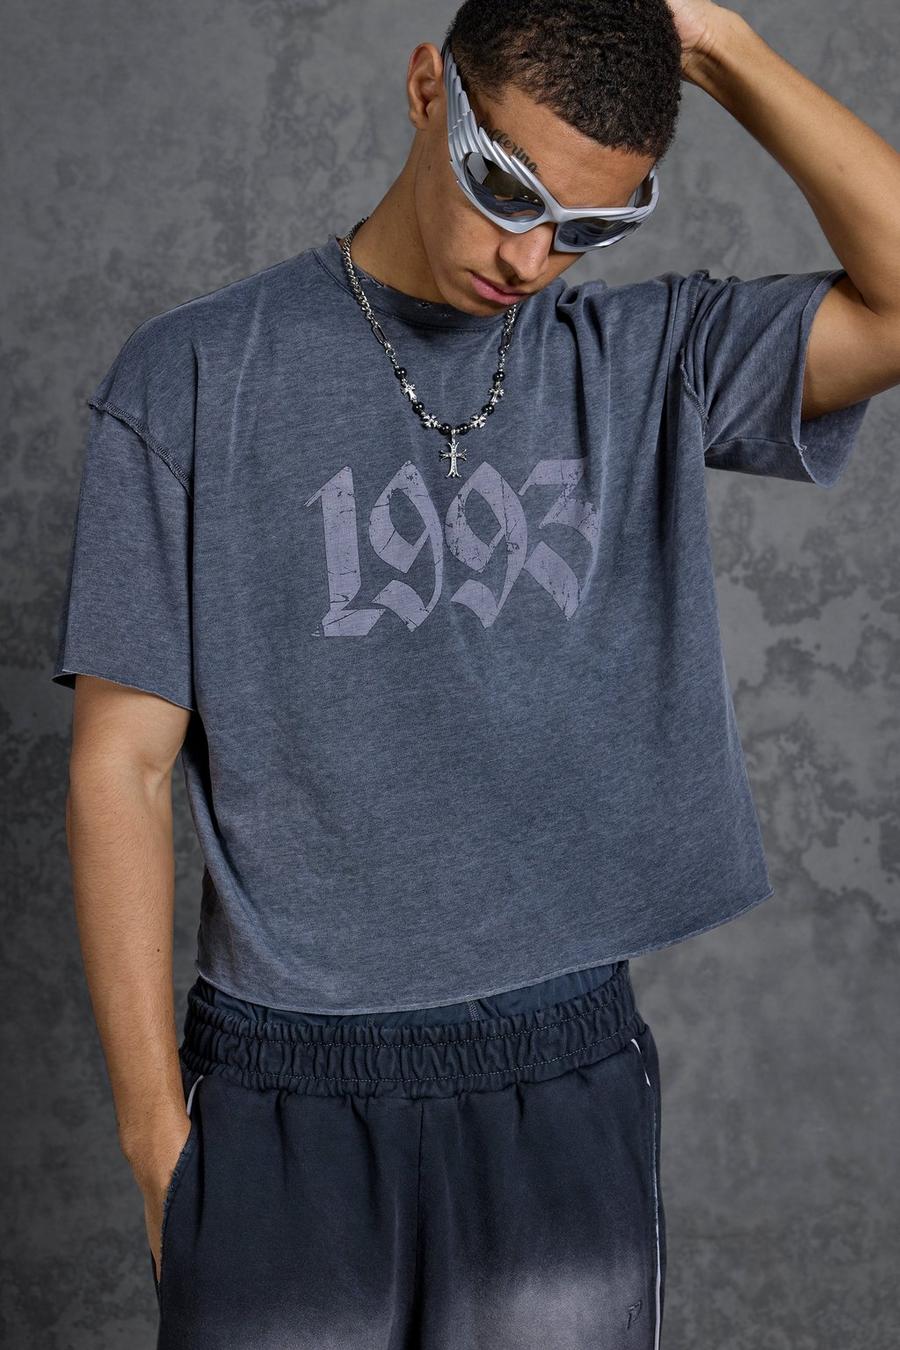 Gunna - T-shirt oversize court imprimé 1993, Charcoal image number 1